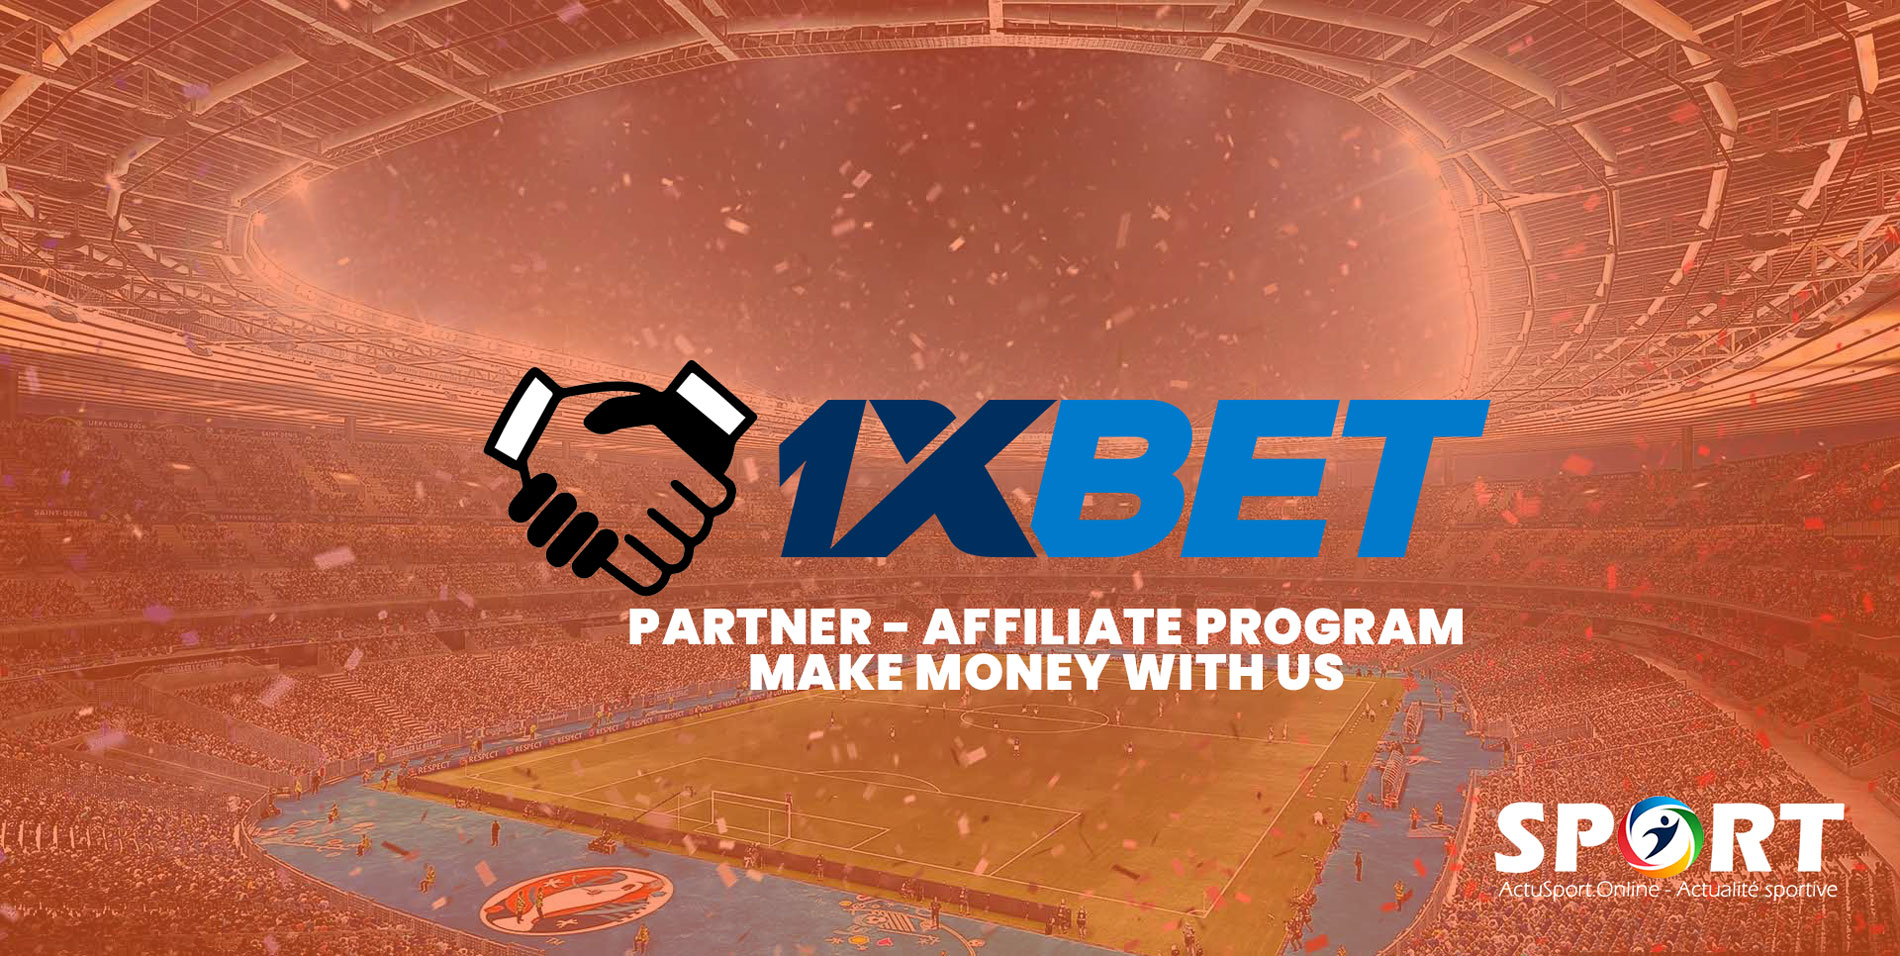 1xbet-partner-Affiliation-program-make-money-with-us-in-Africa